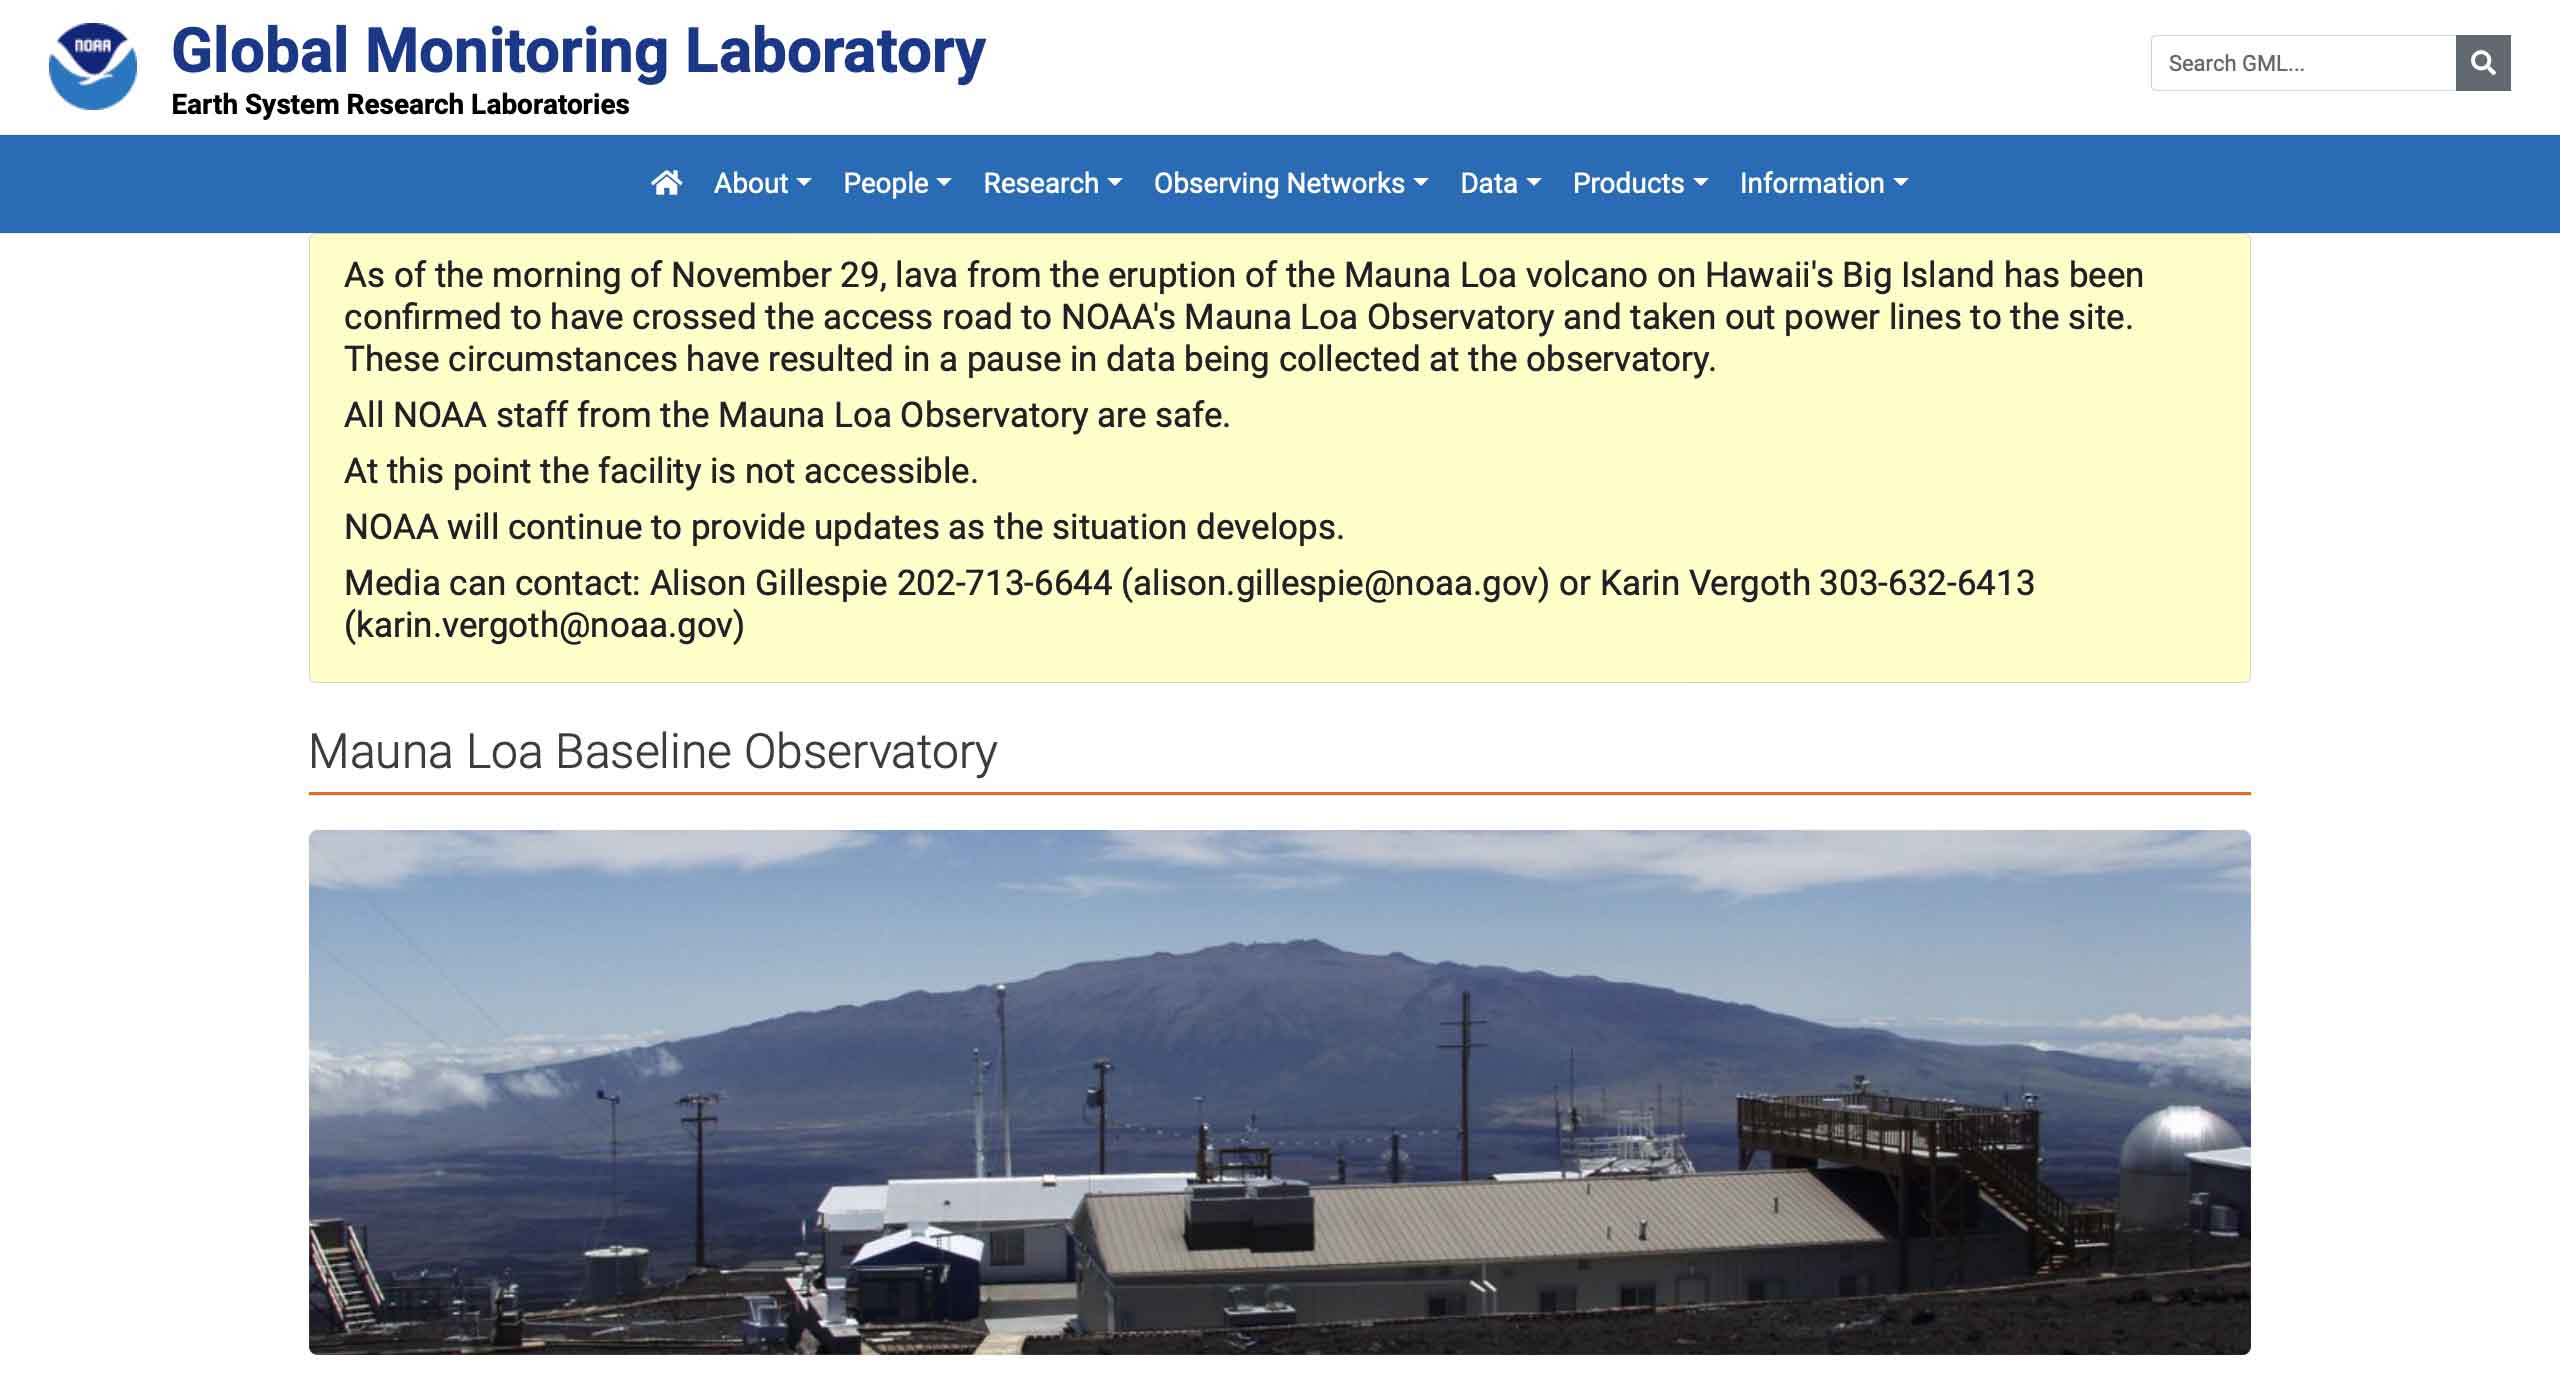 NOAA уведомление о 29 ноября 2022 г., пауза в сборе данных на Mauna Loa Обсерватория после того, как лава перерезала линии электропередач